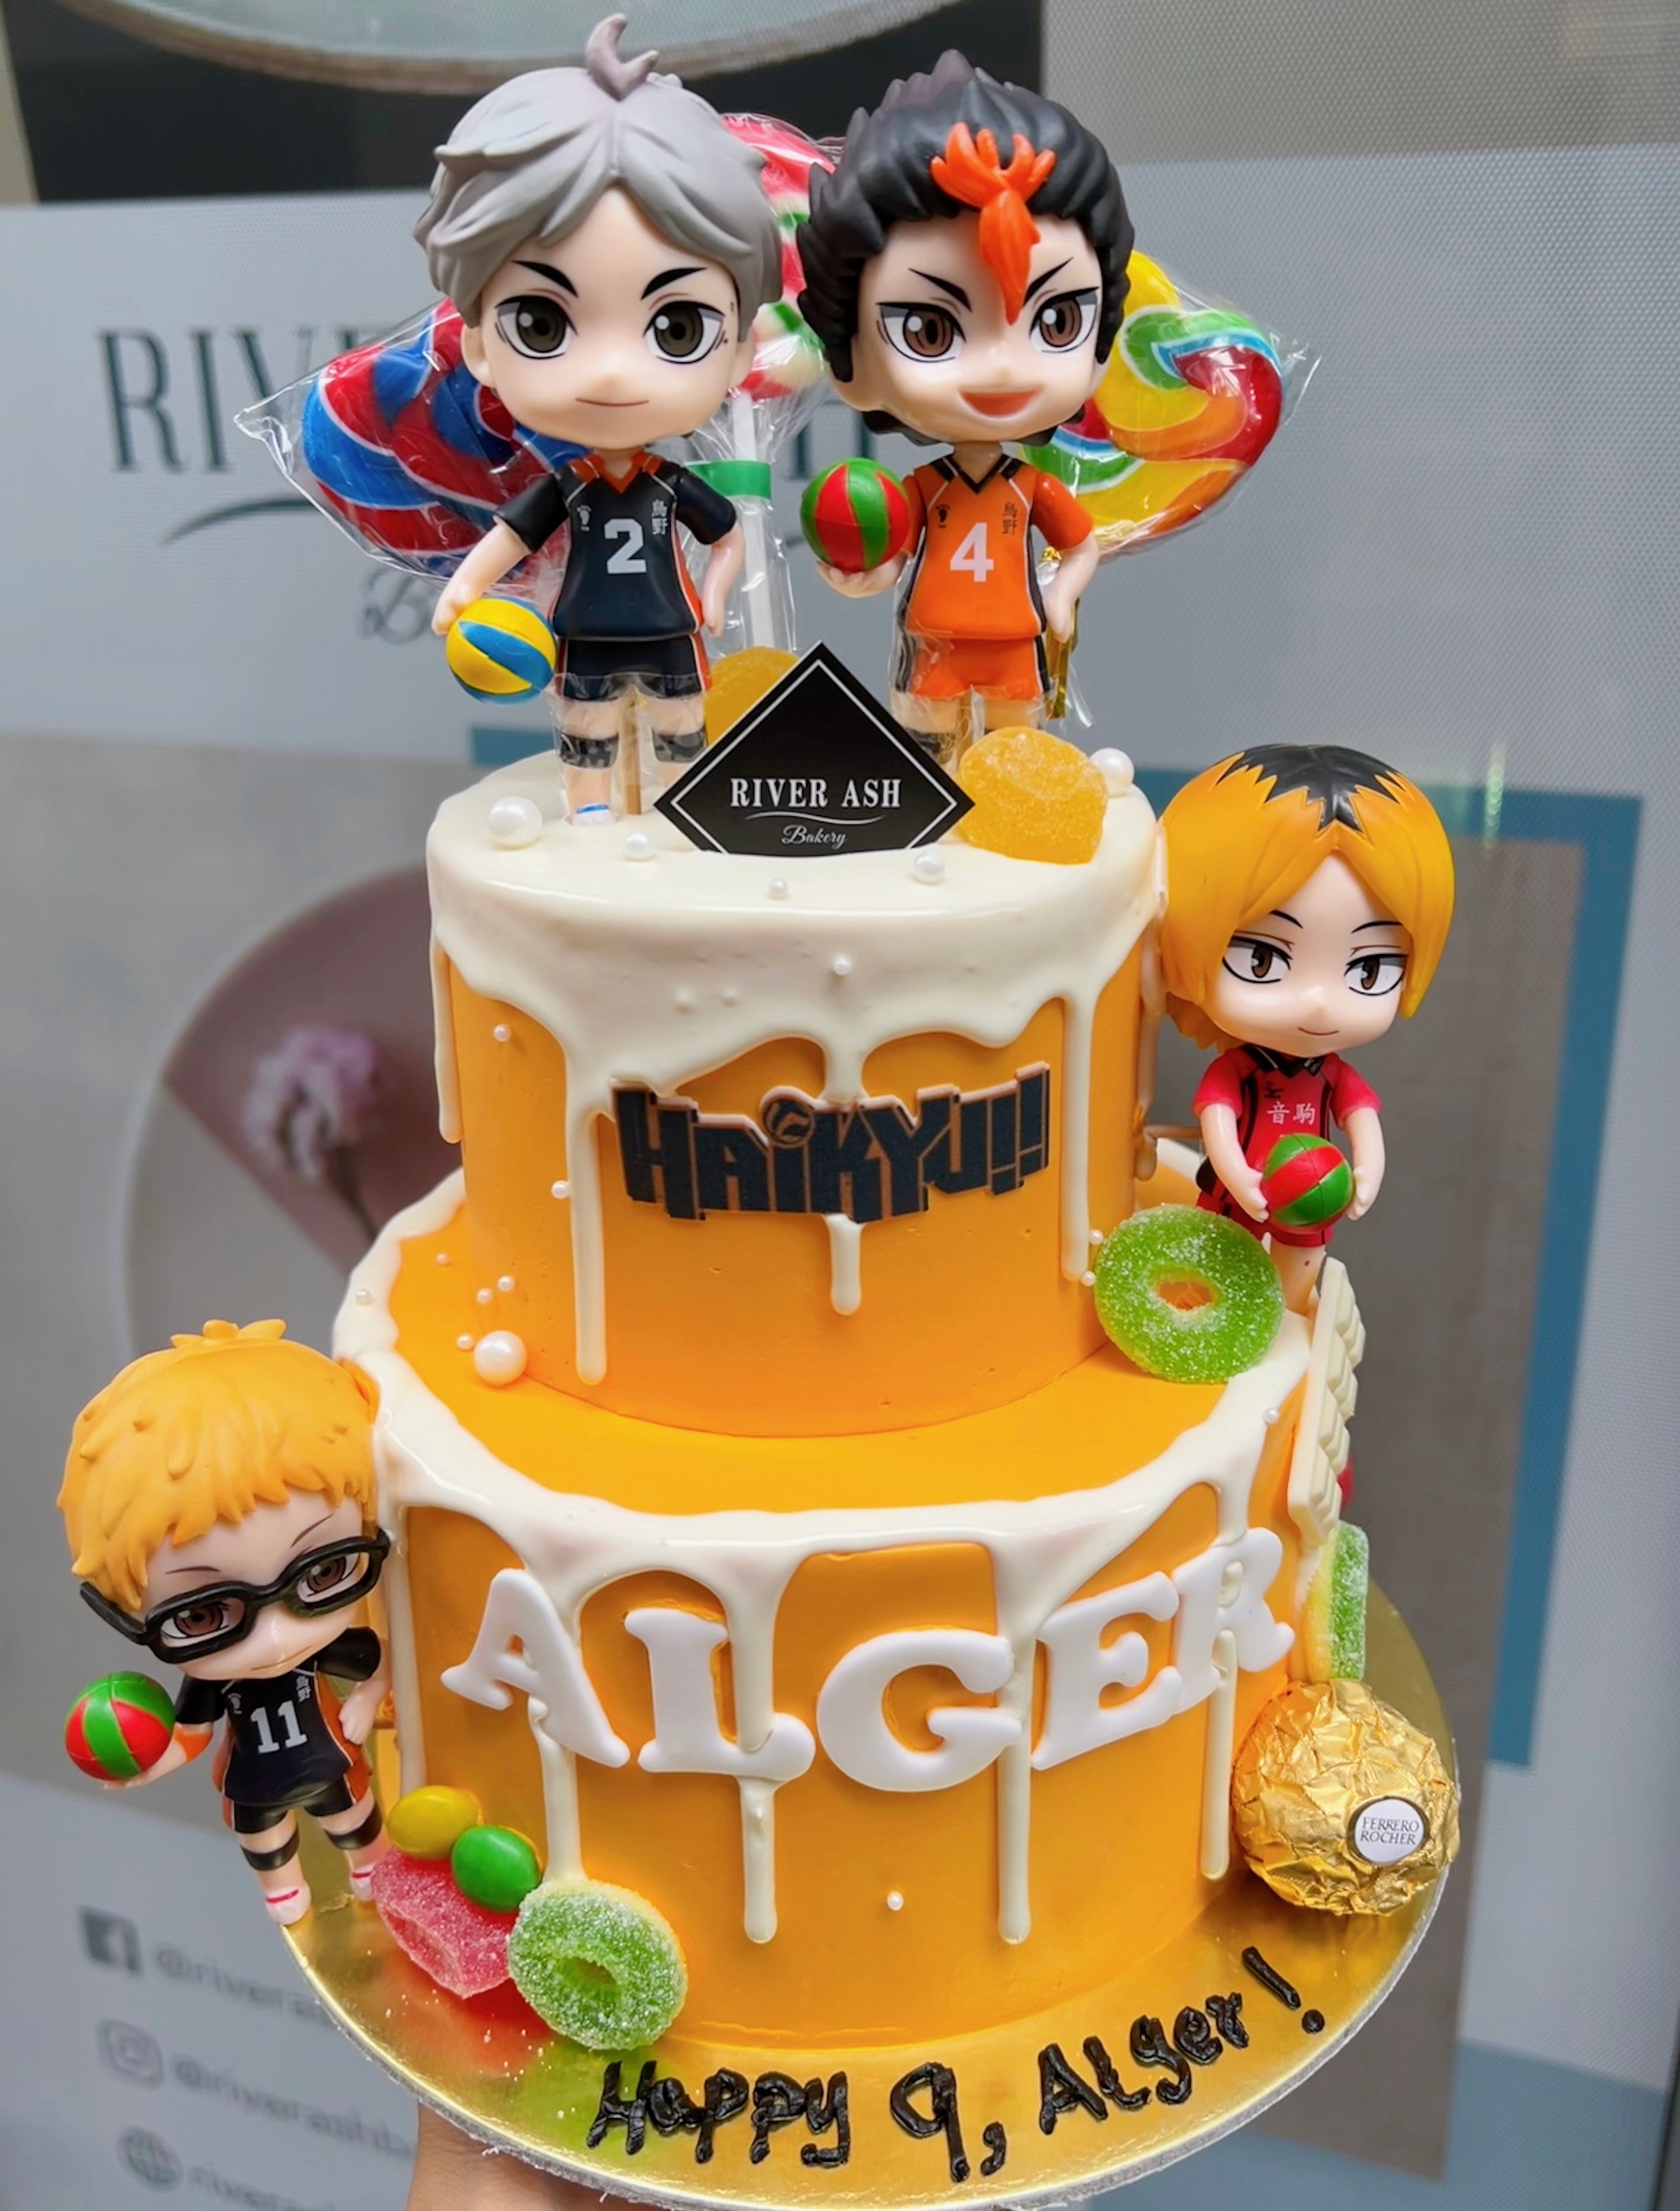 Joyful Anime Girl Celebrating with Birthday Cake - HD Wallpaper by  robokoboto